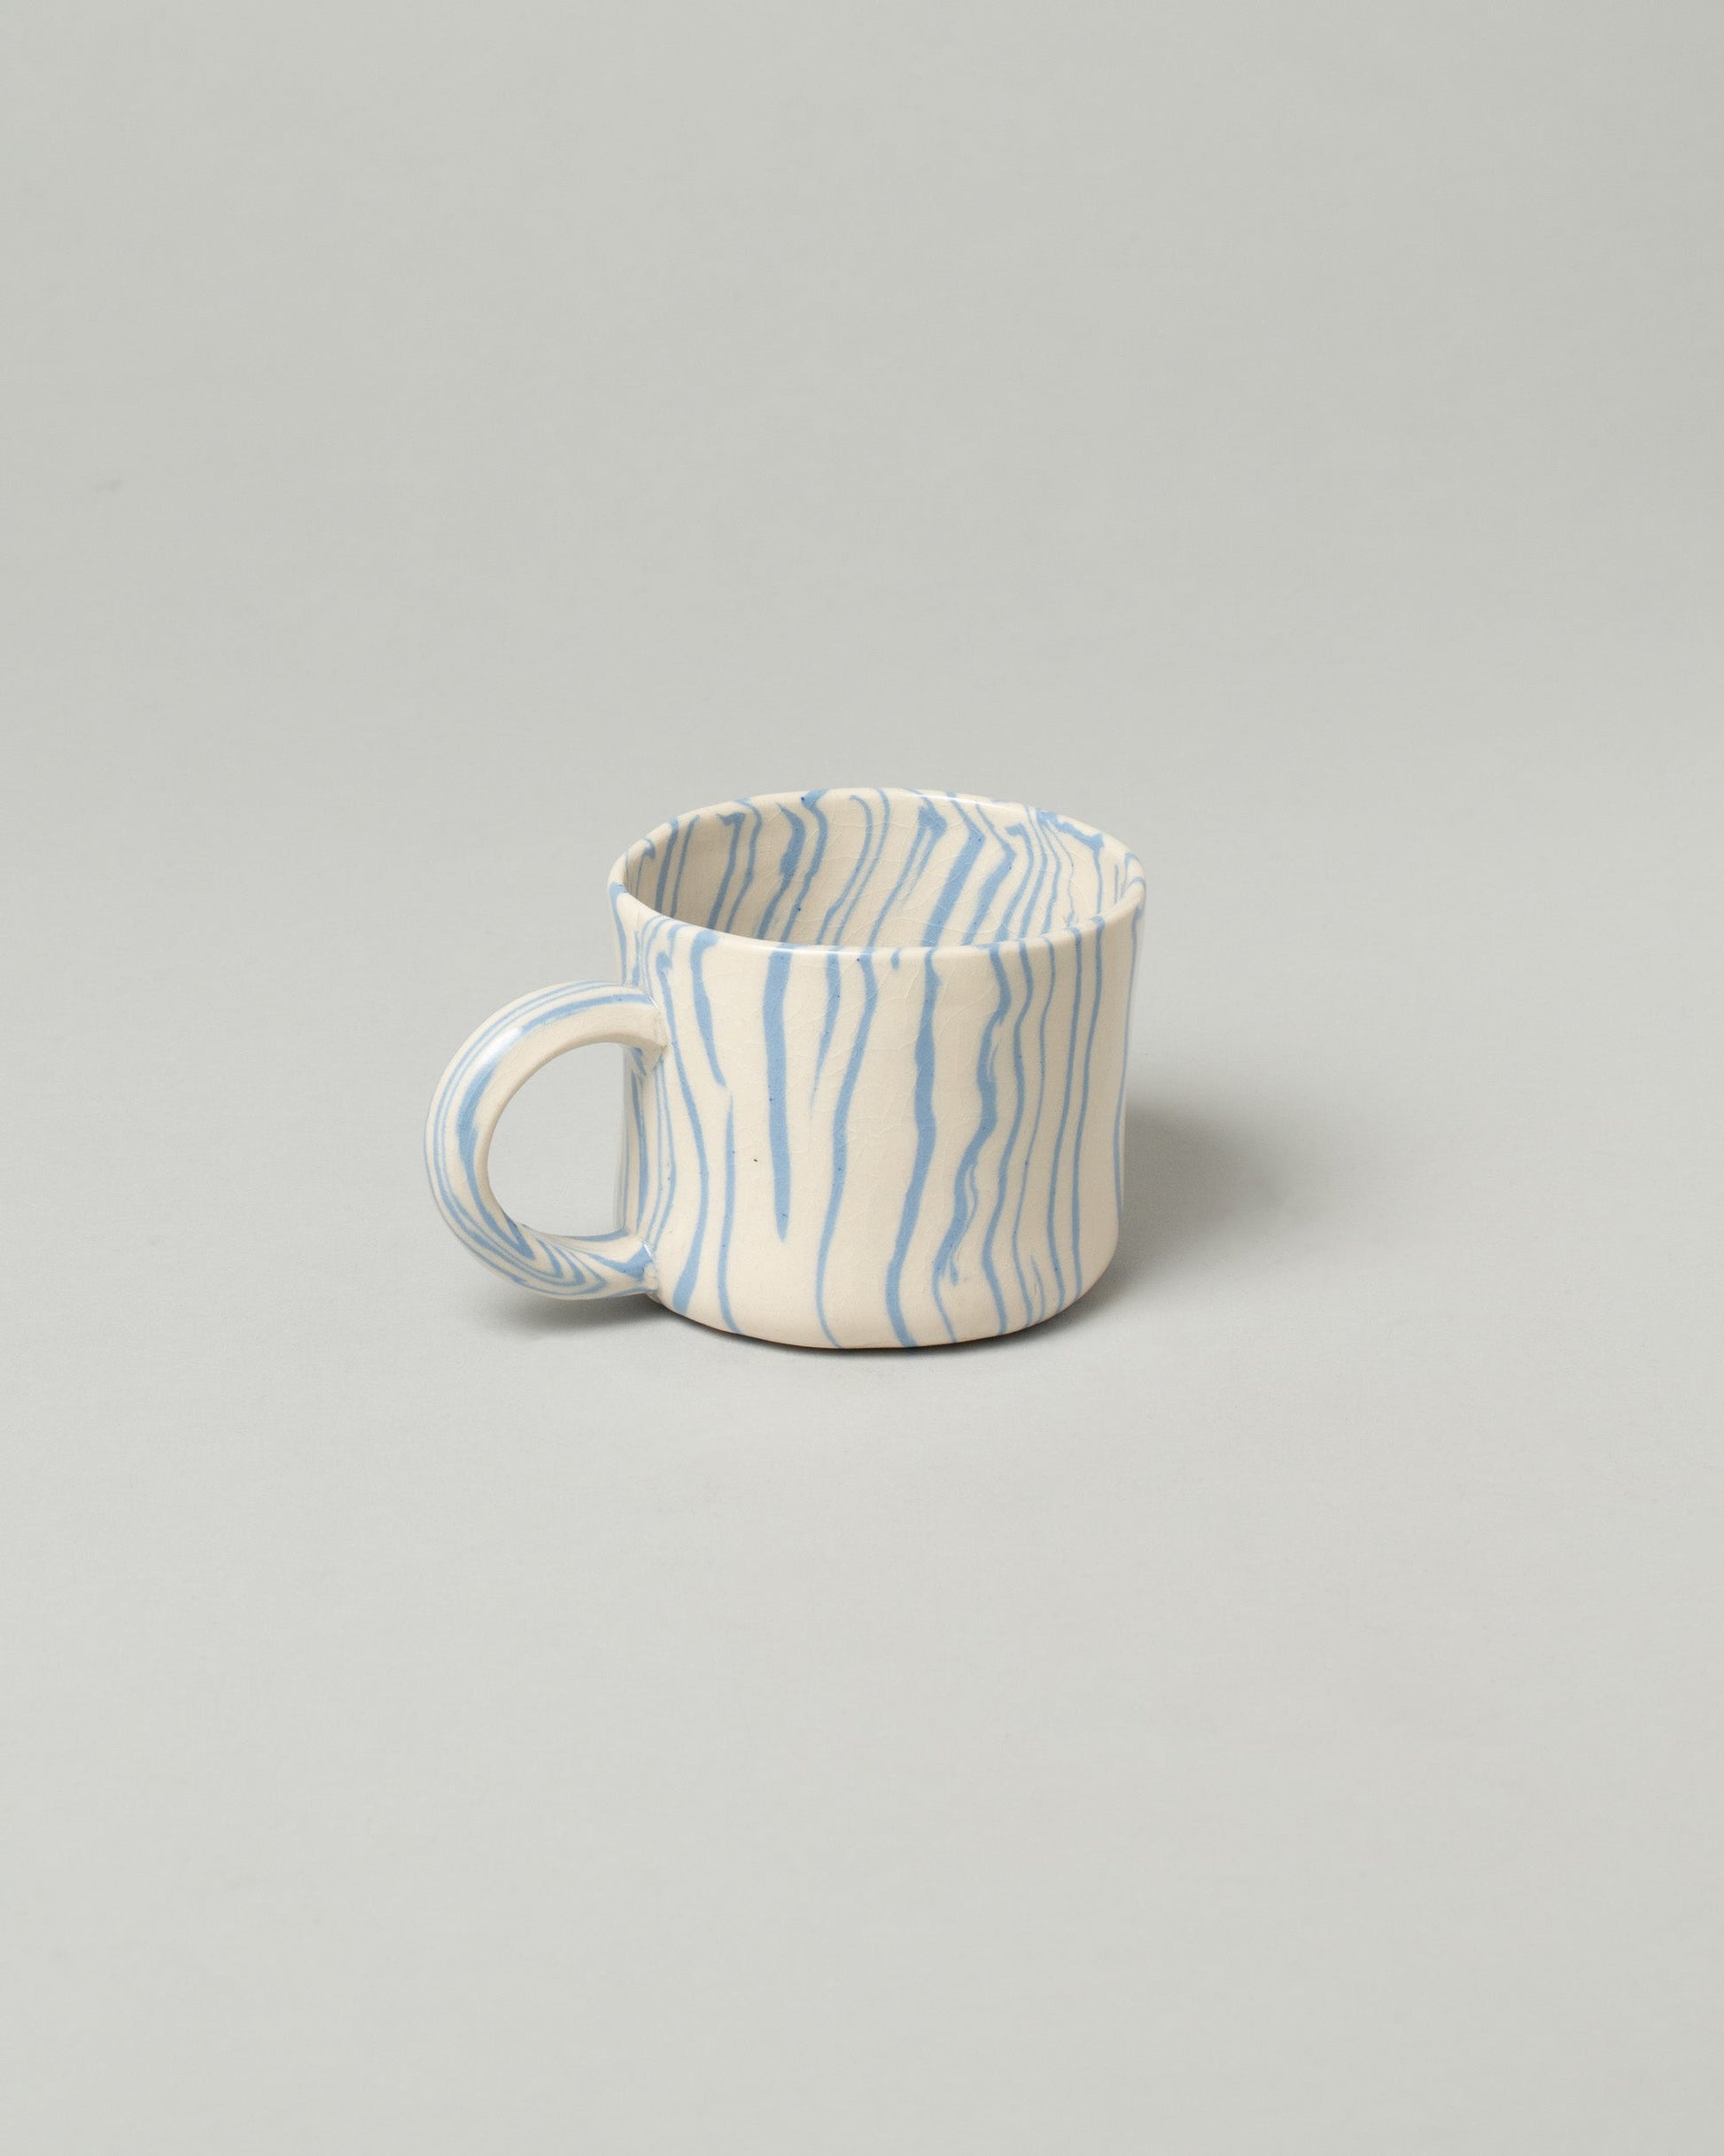 Product photo of the Nerikomi Mug on a light color background